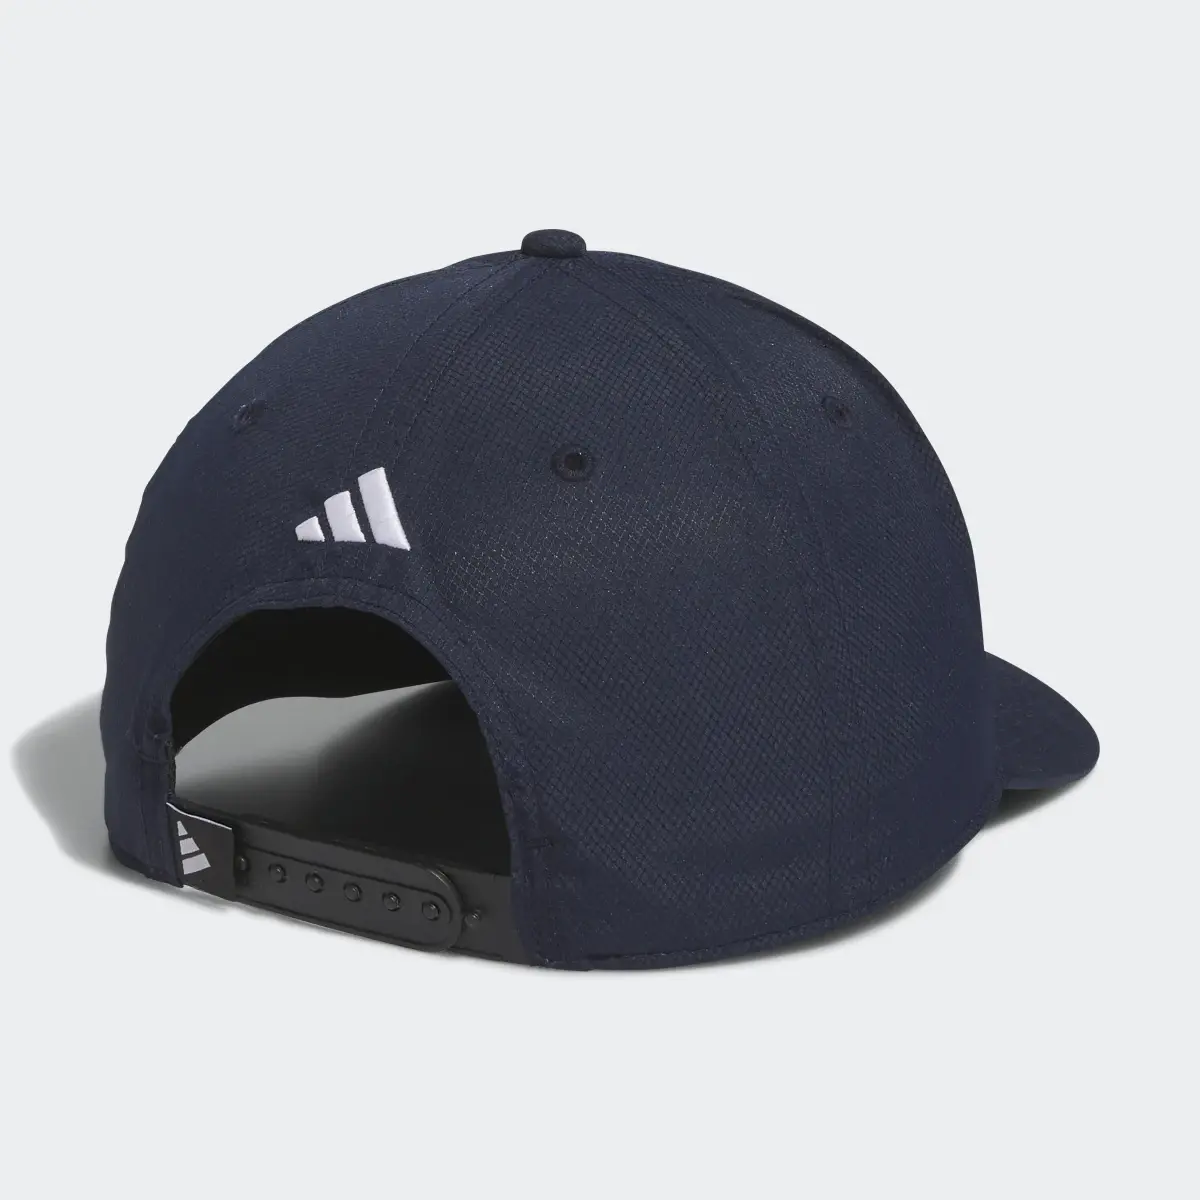 Adidas 3-Stripes Tour Golf Hat. 3